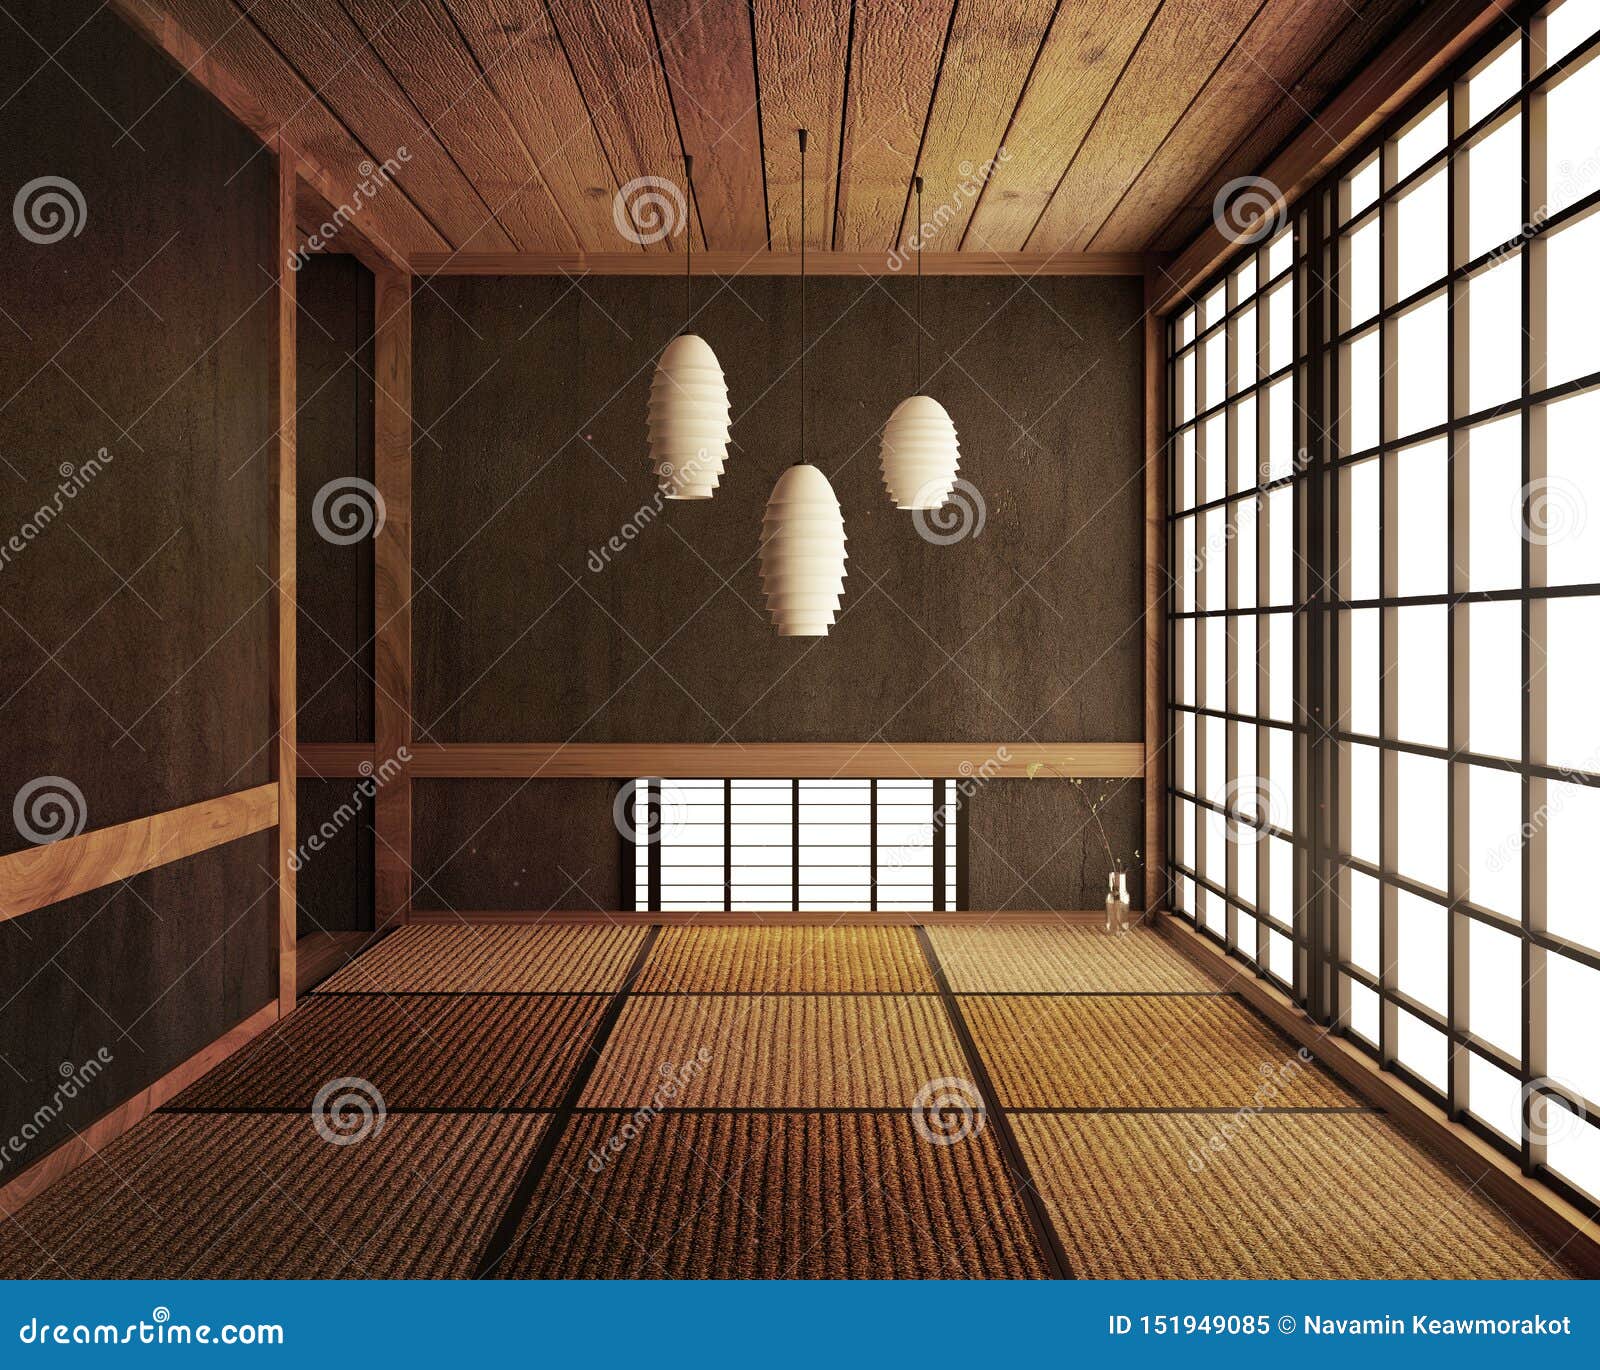 Japanese Display Room And Tatami Mat Flooring .3D Render ...